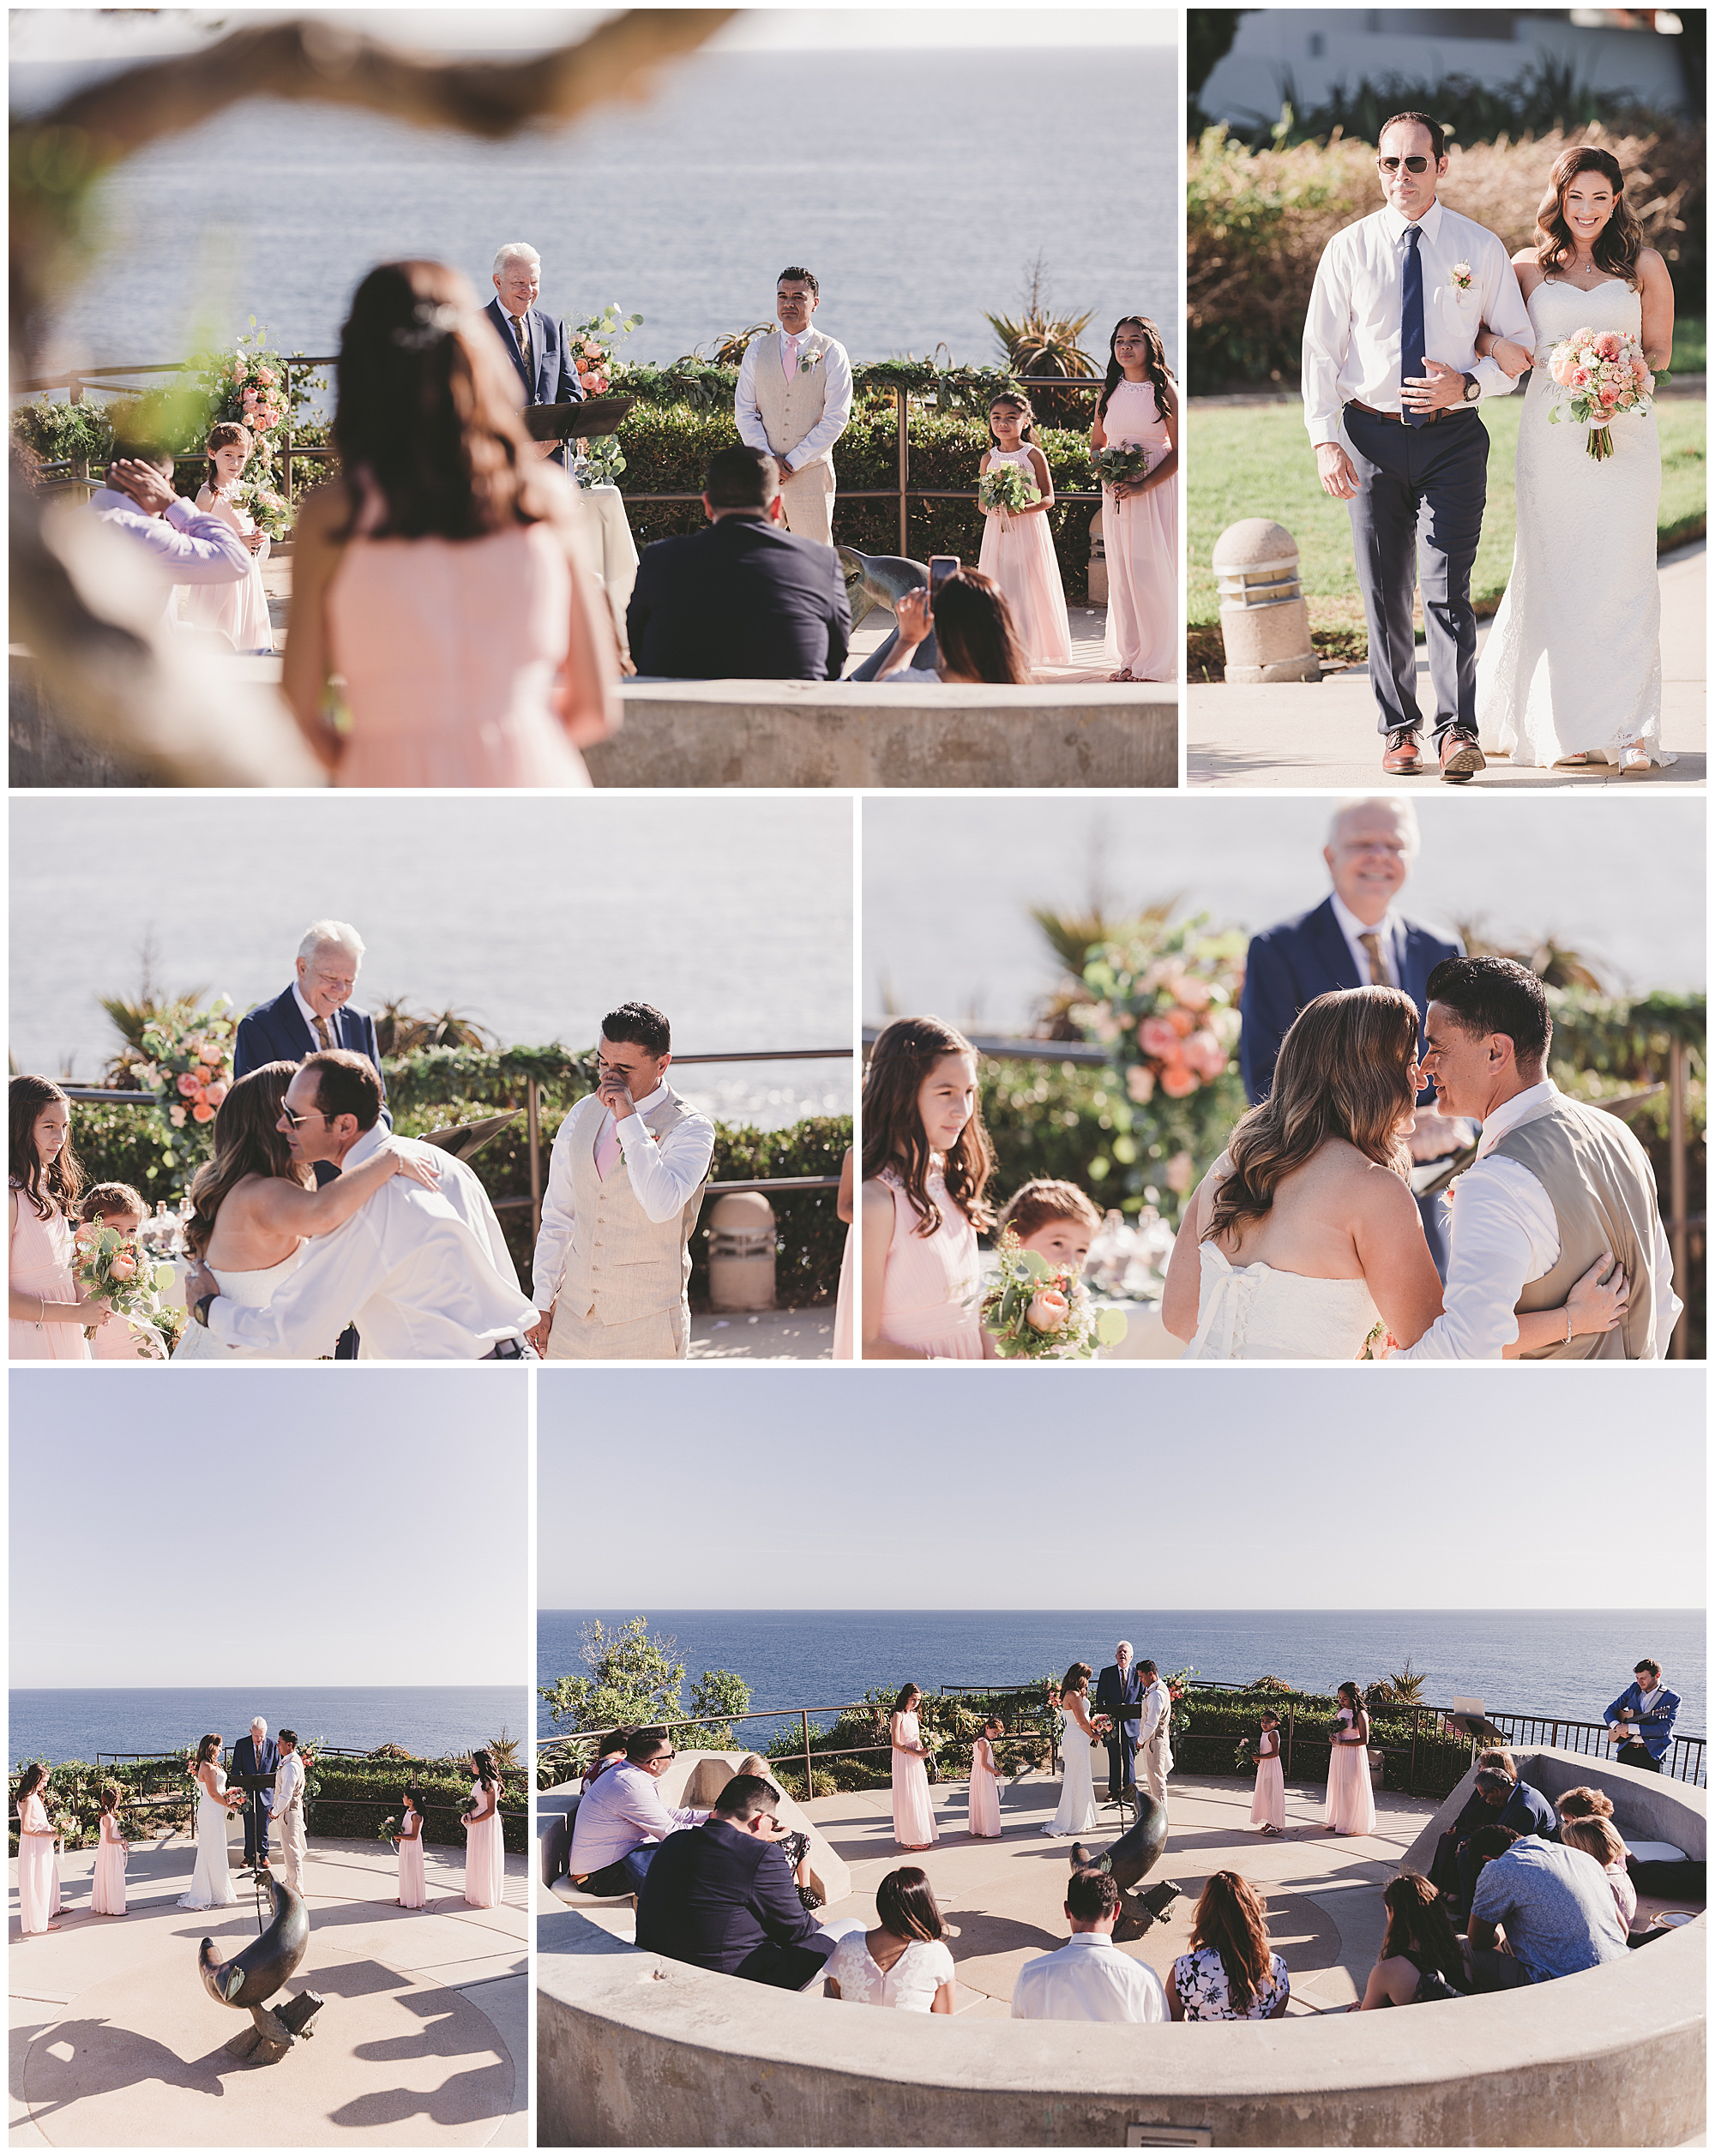 Laguna Beach Crescent Bay Point Park wedding ceremony